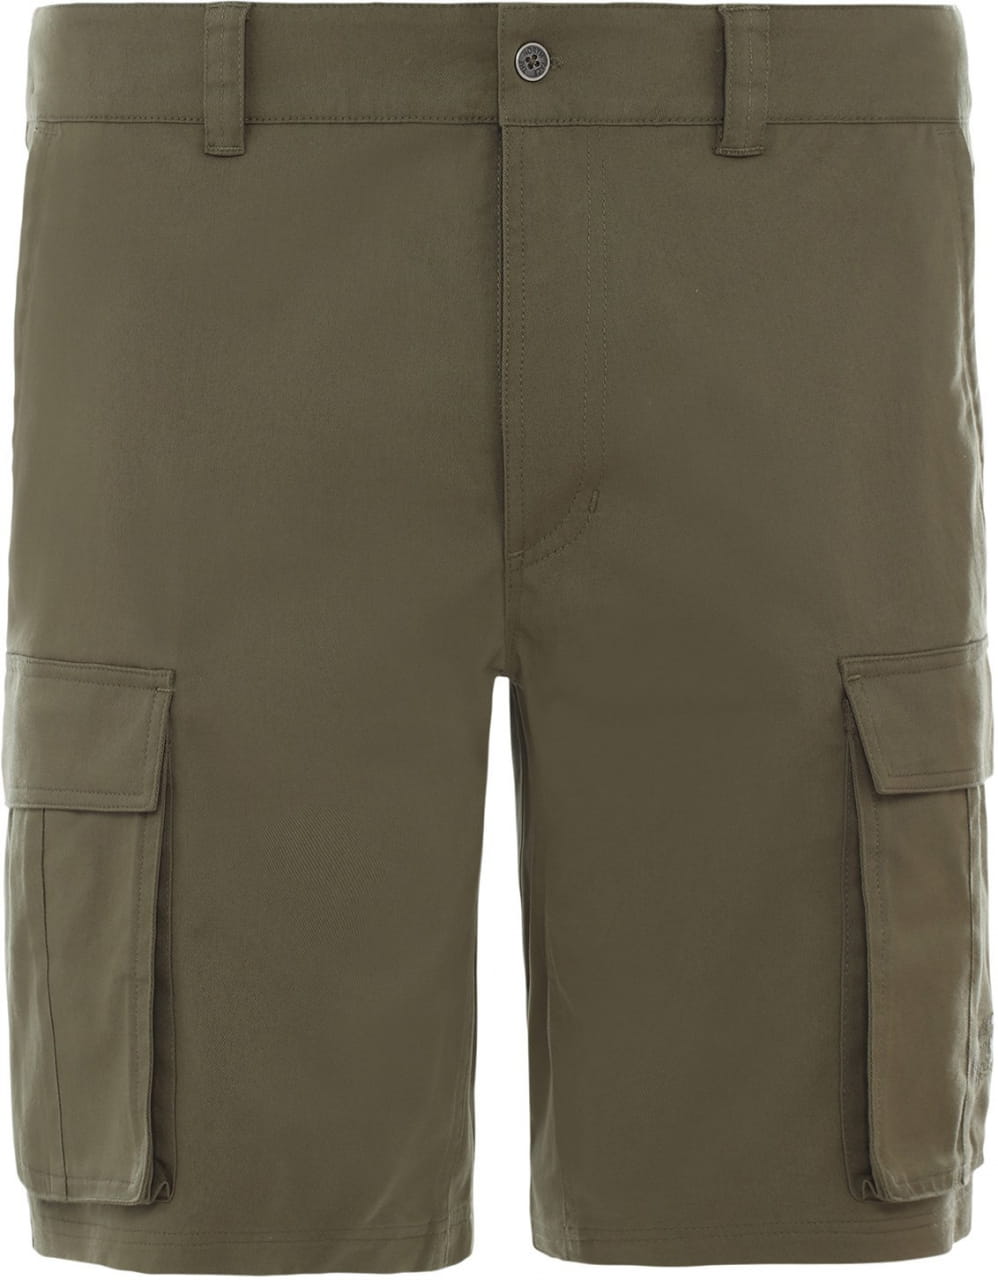 Shorts The North Face Men's Anticline Cargo Shorts